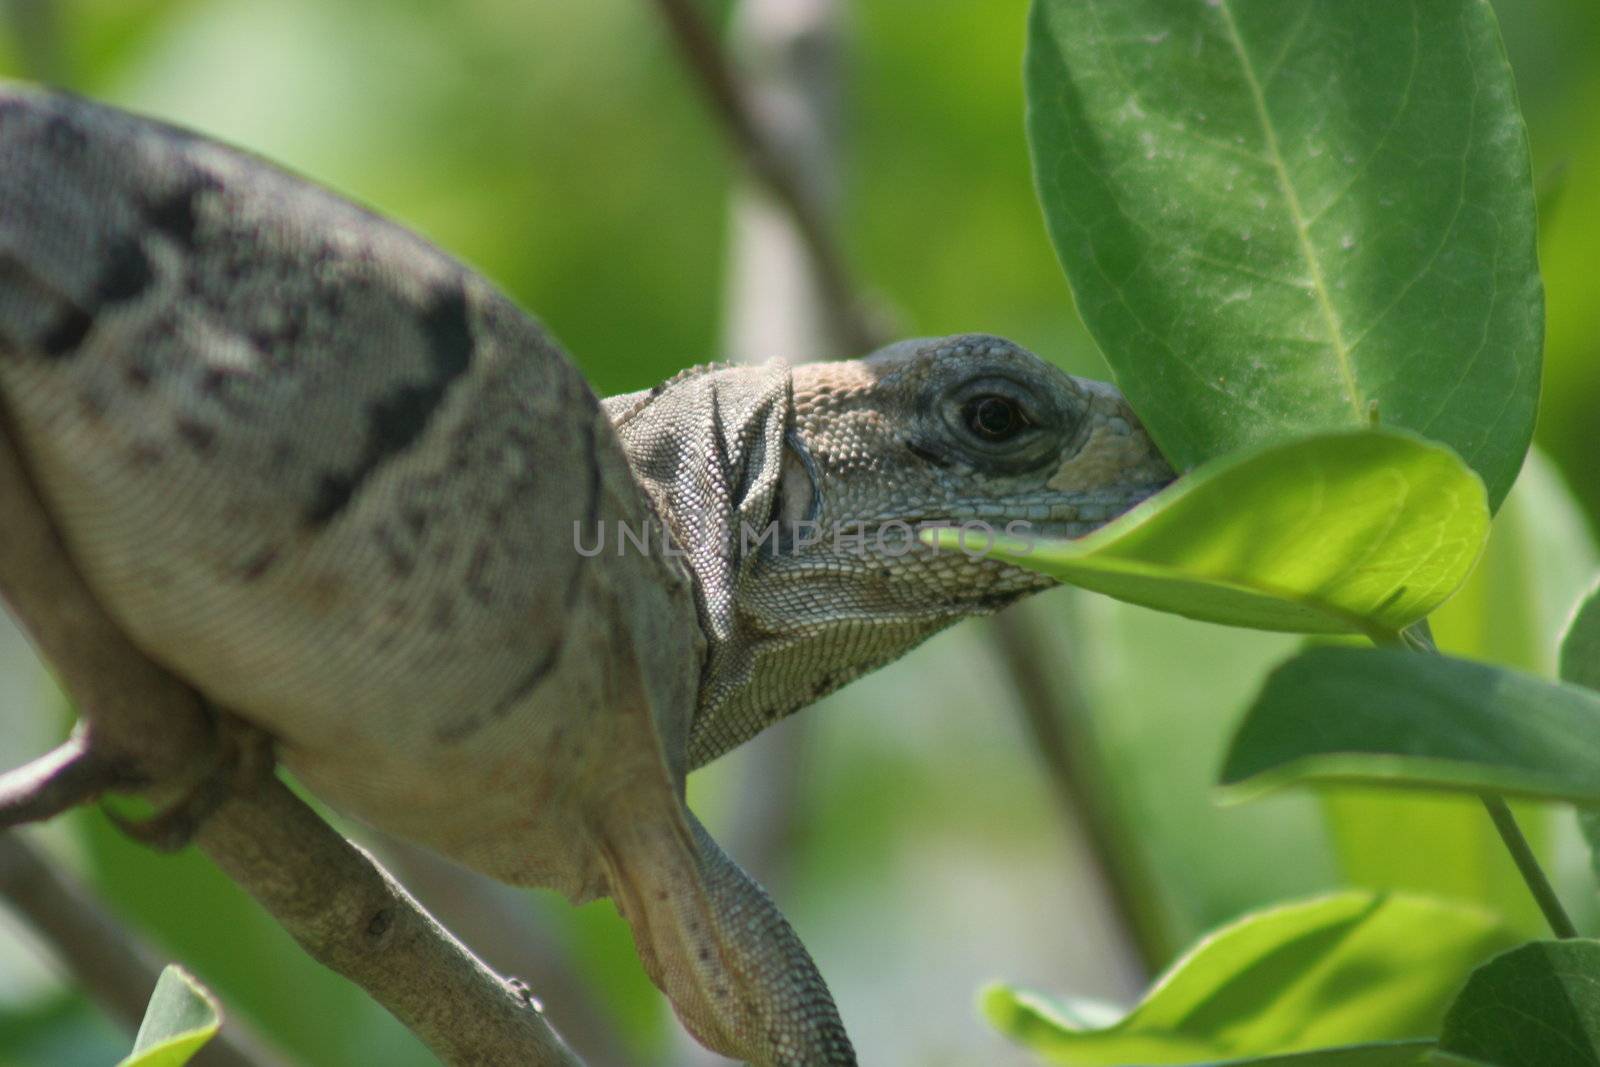 Mexican Iguana